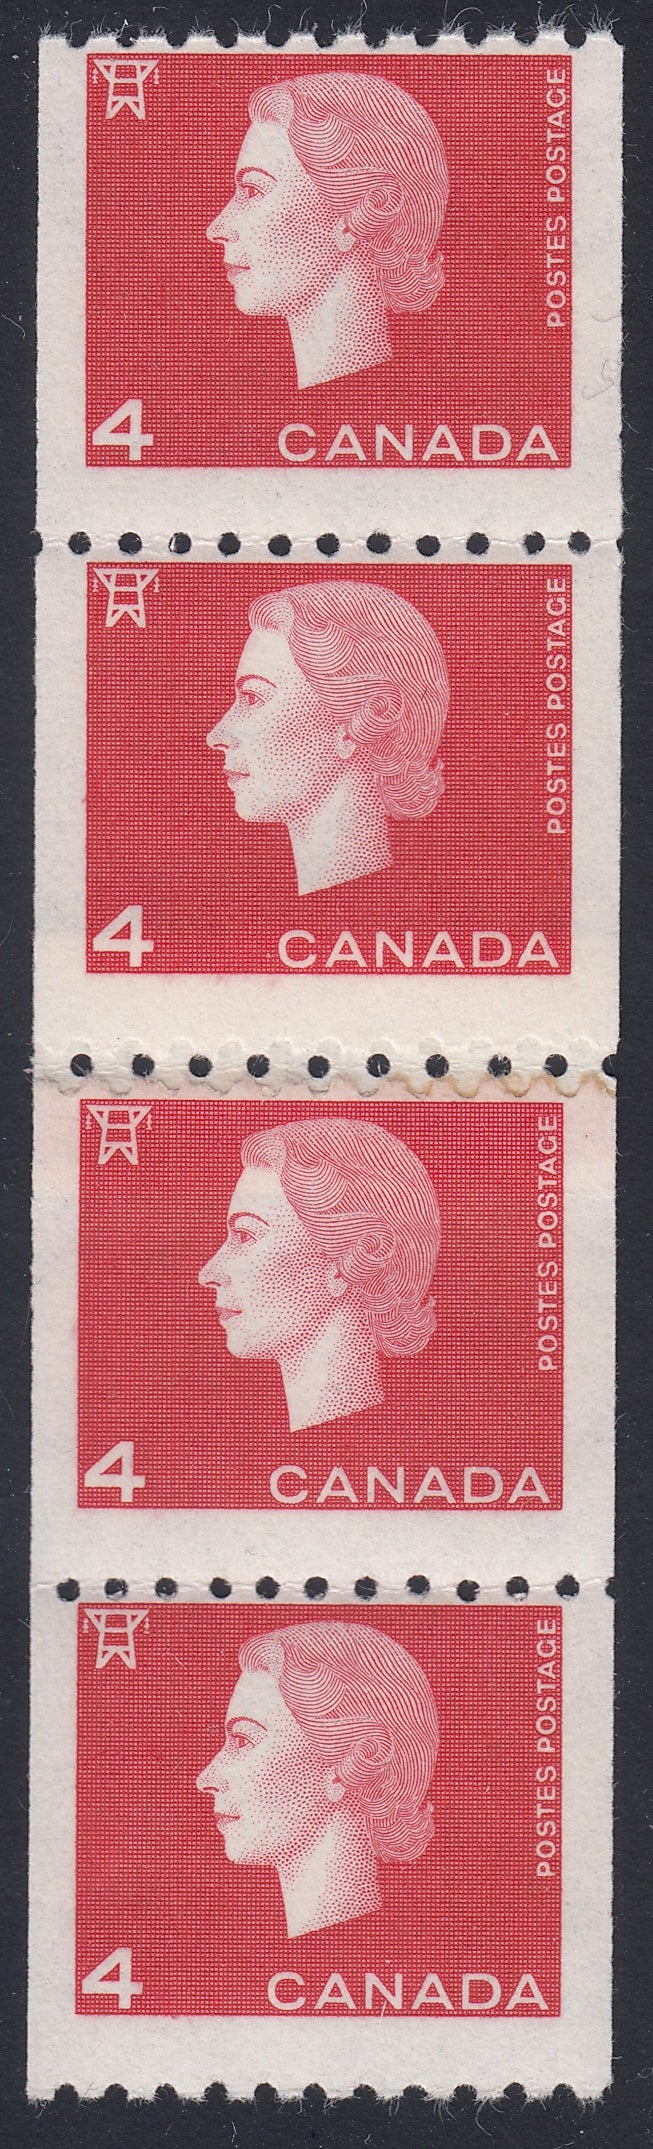 0408CA1801 - Canada #408 Mint Repair Paste-up Strip of 4